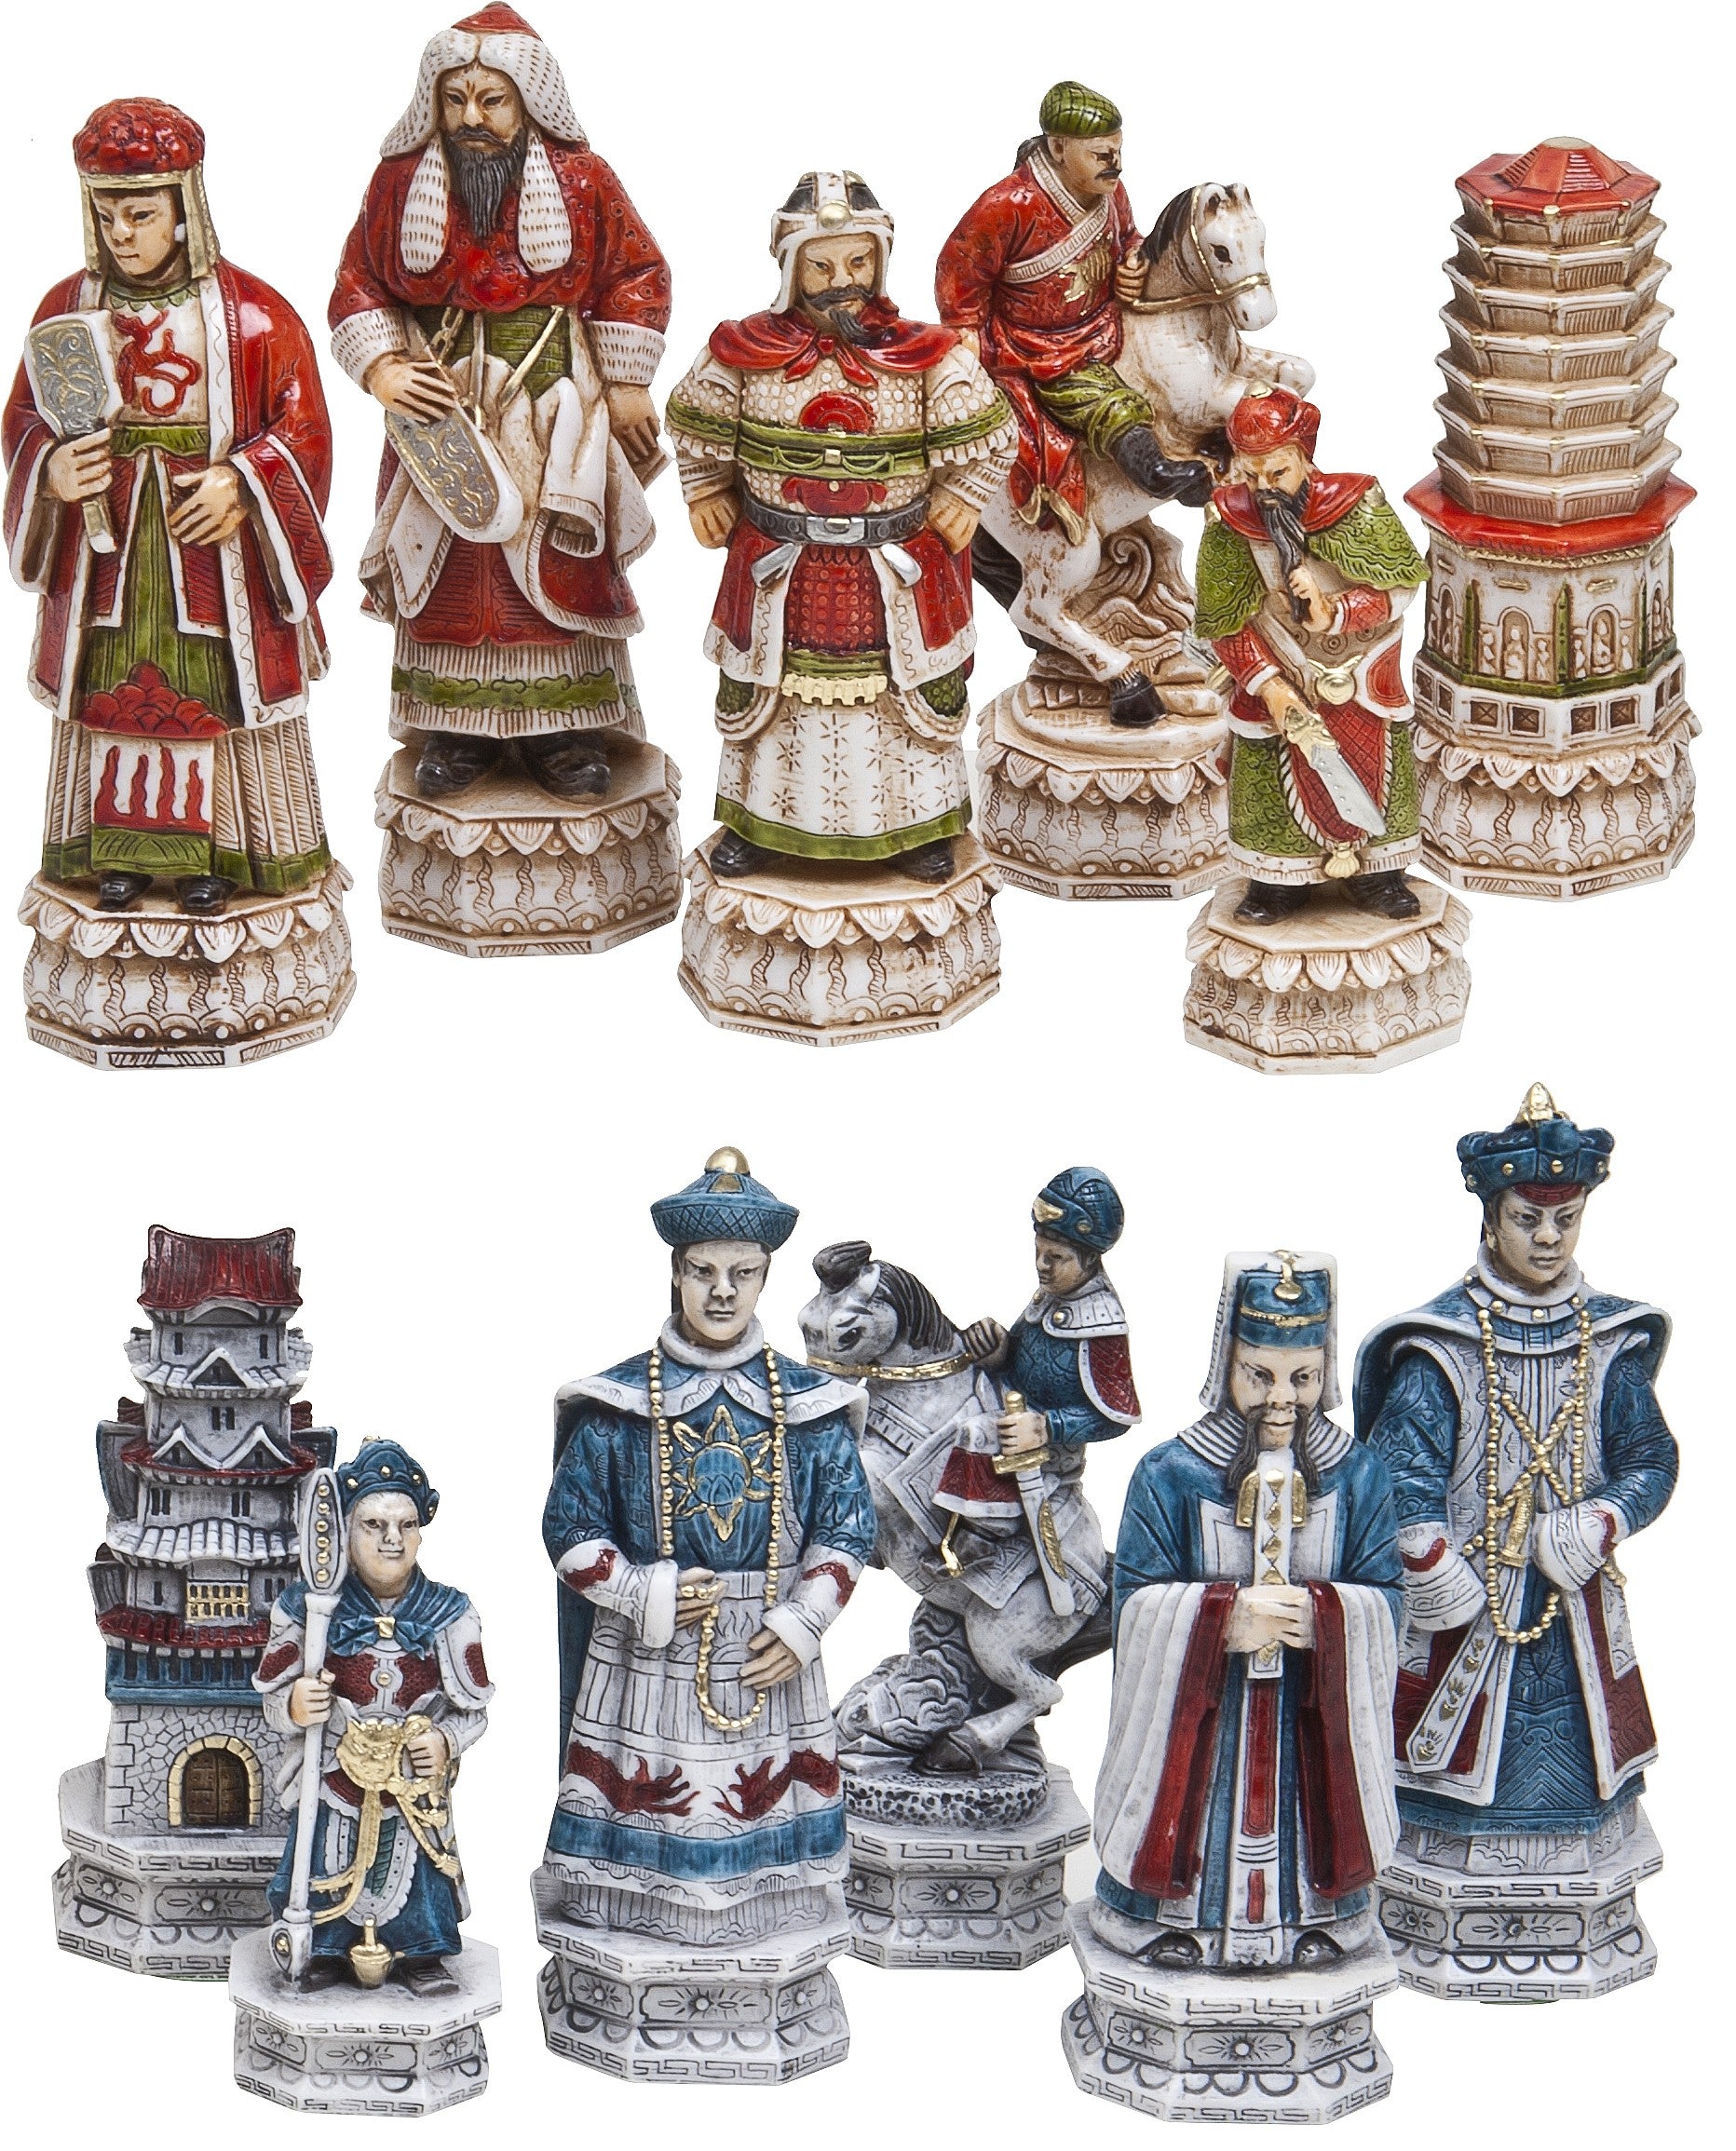 The Ming Dynasty Themed Chessmen